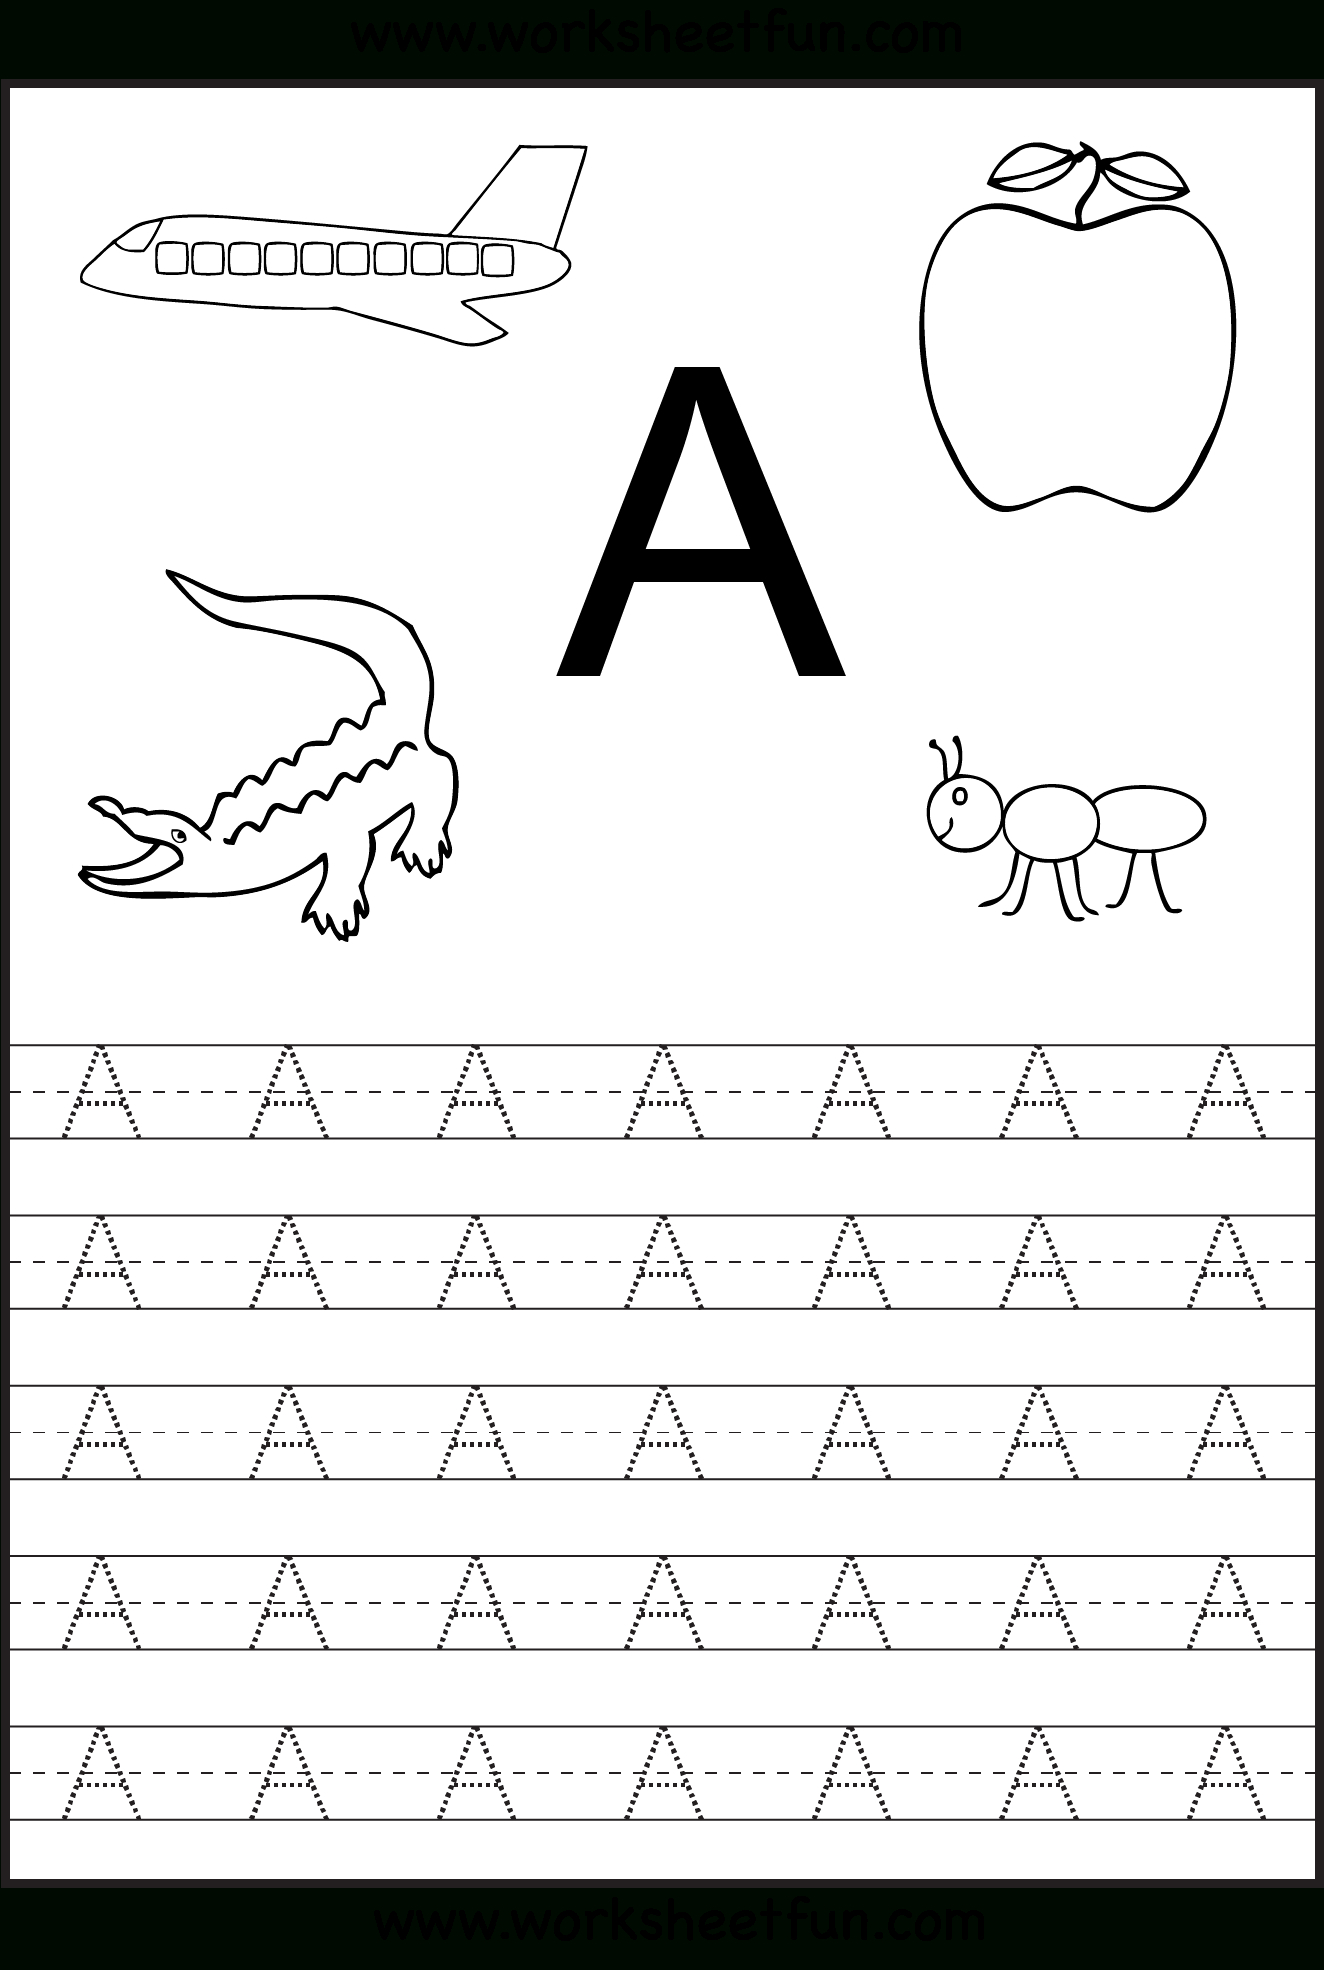 Free Printable Worksheets: Letter Tracing Worksheets For throughout Tracing Letter A Worksheets For Preschool